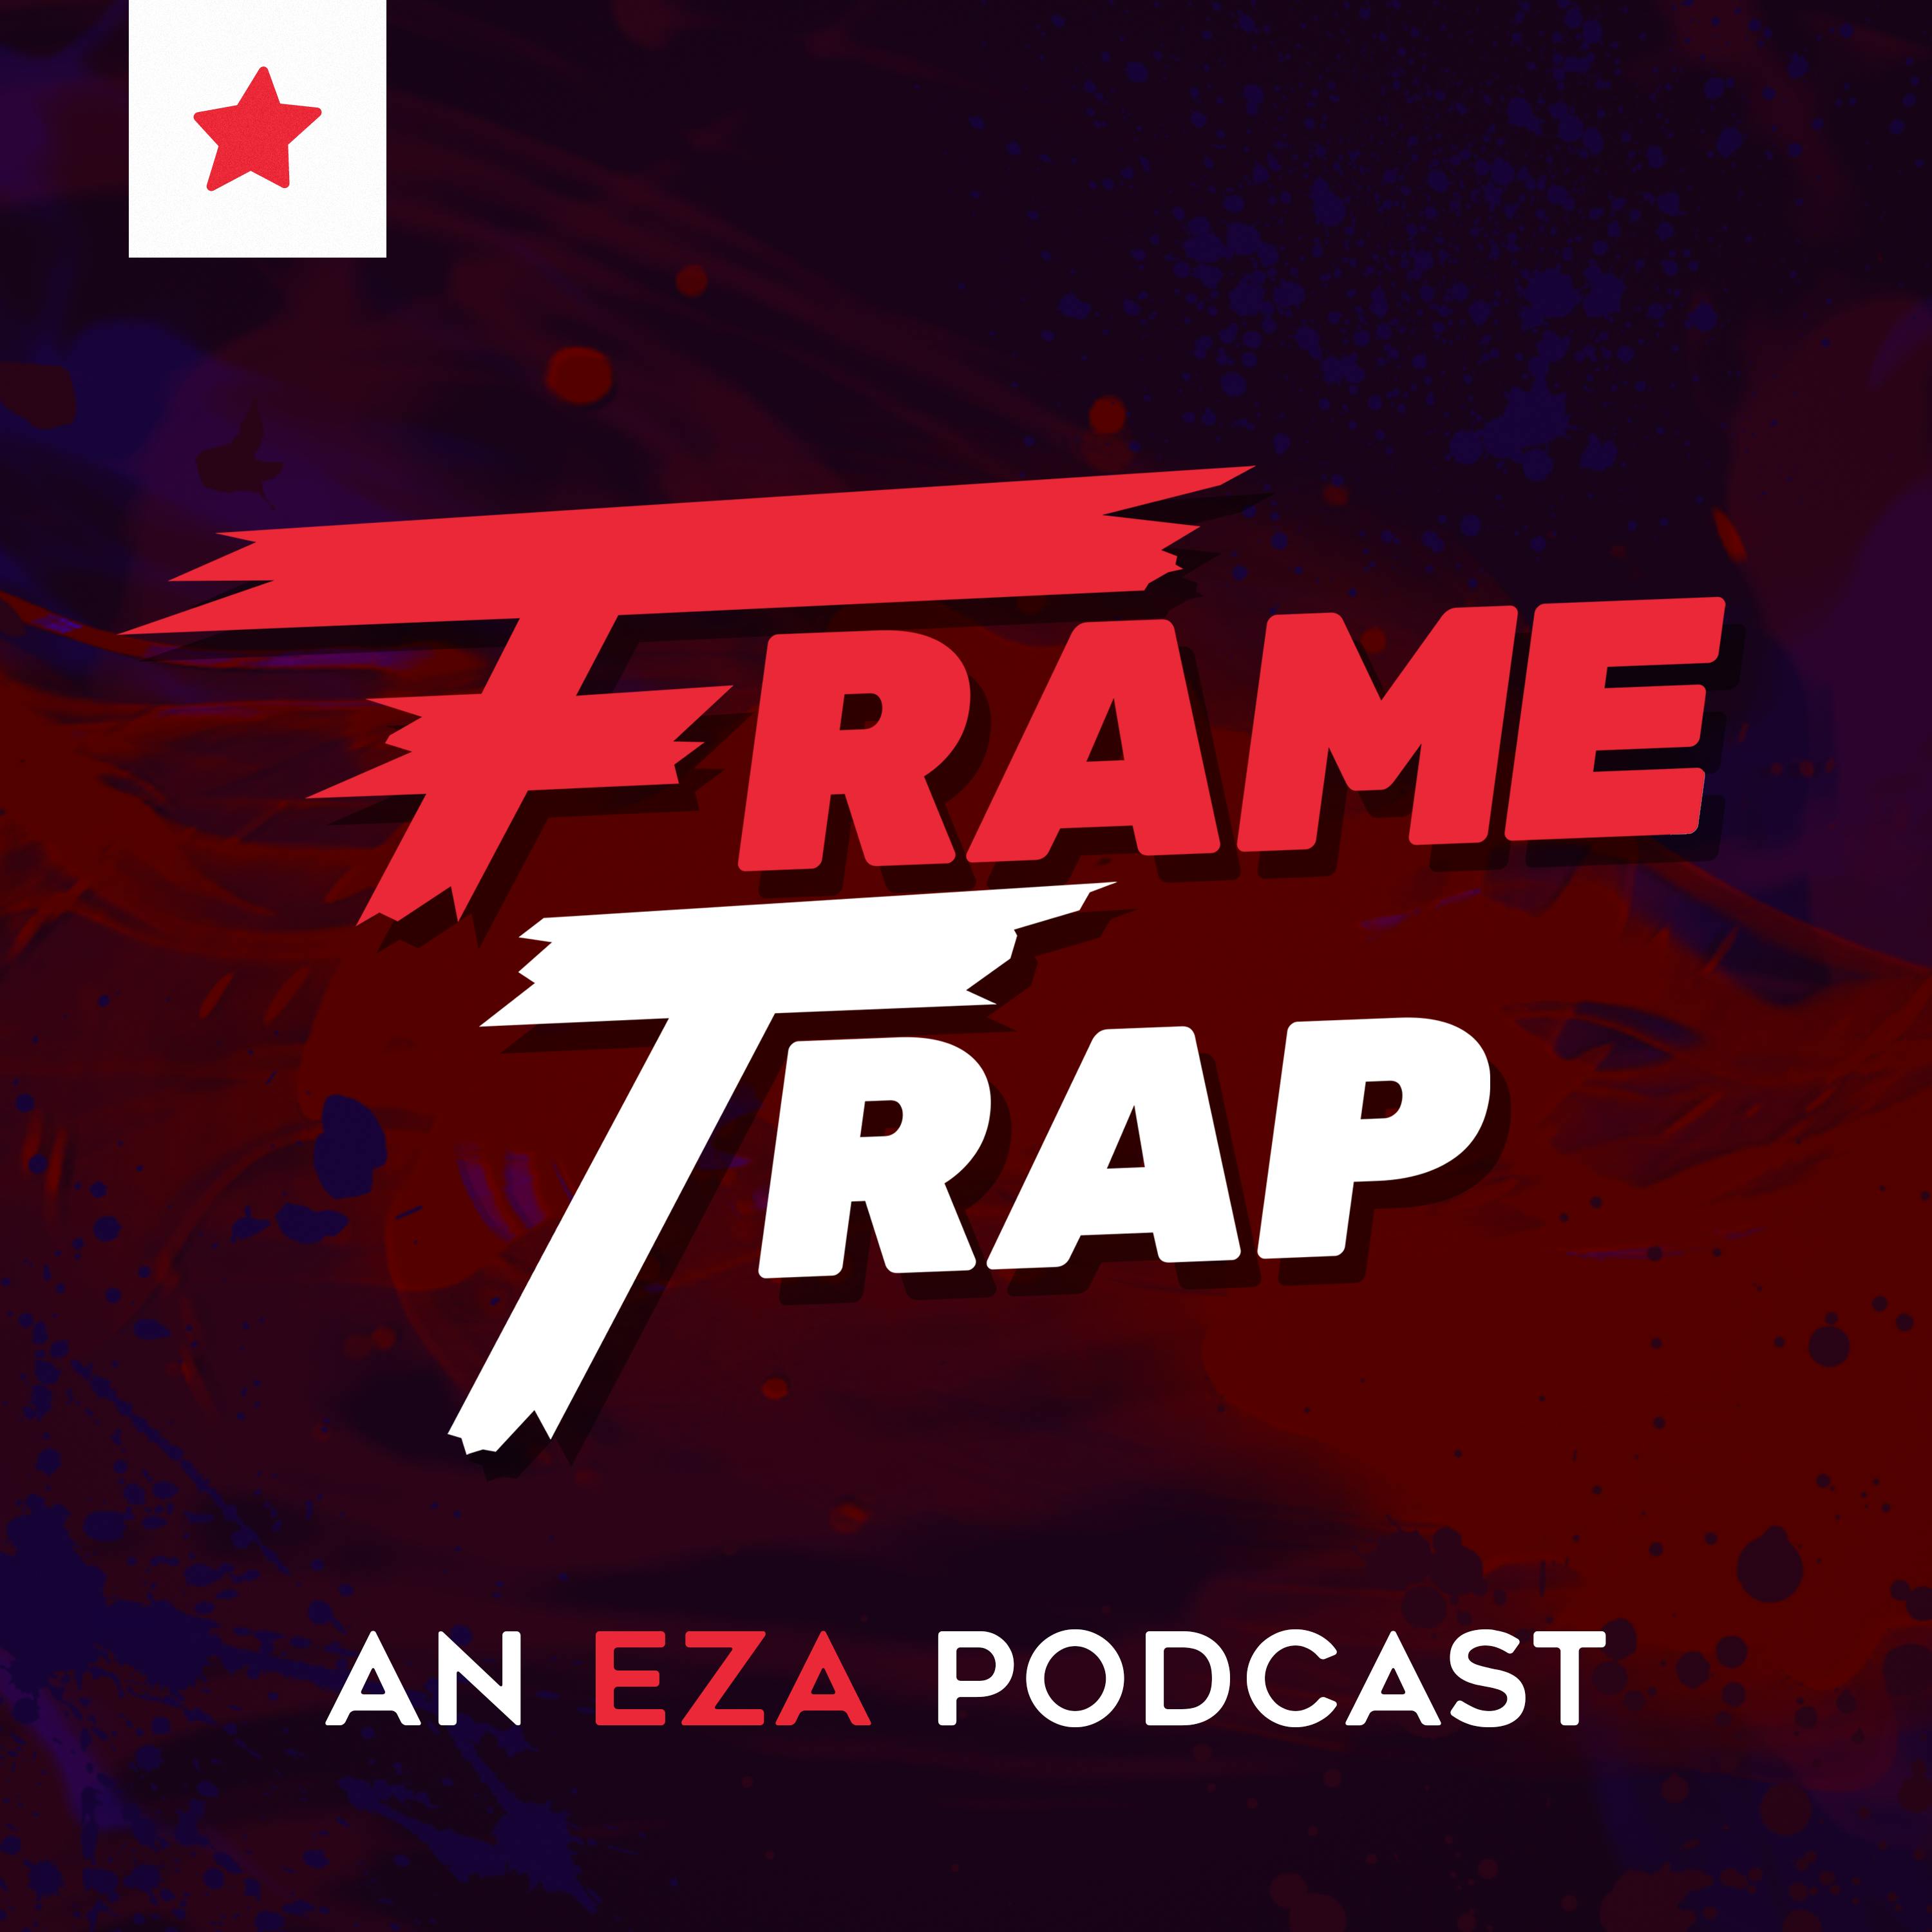 Frame Trap - Episode 168 